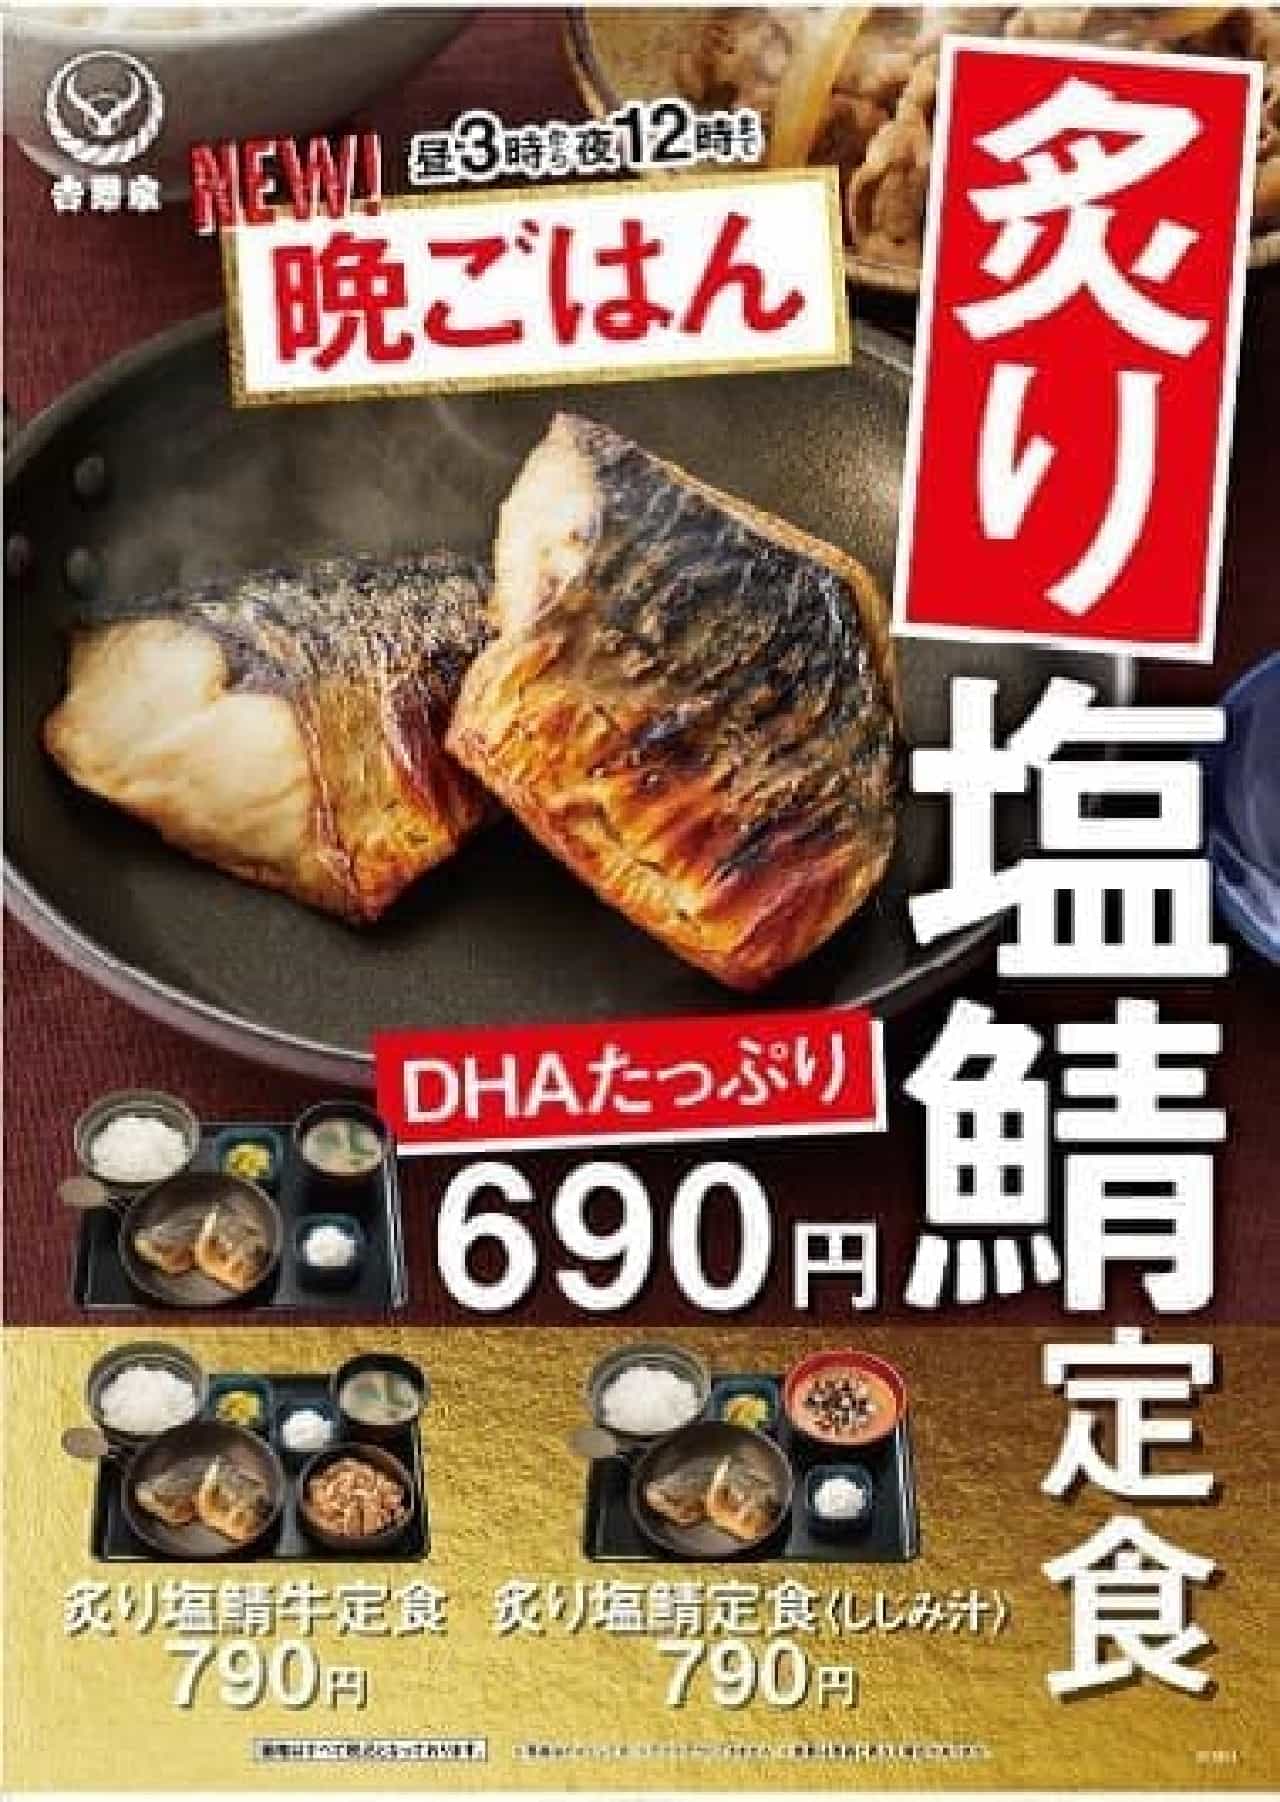 Supper limited "Grilled salted mackerel set meal" for Yoshinoya